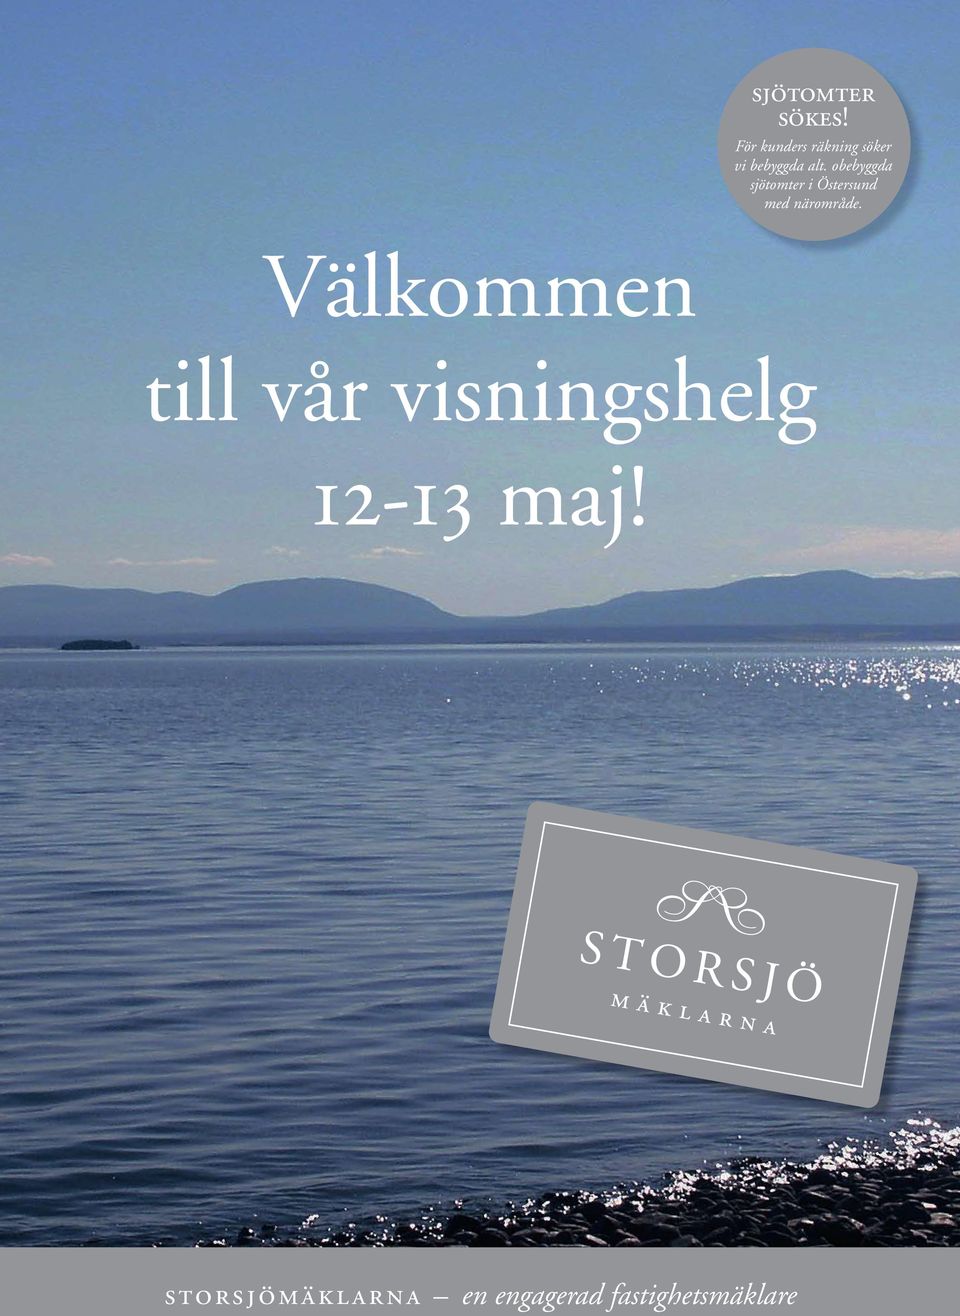 alt. obebyggda sjötomter i Östersund